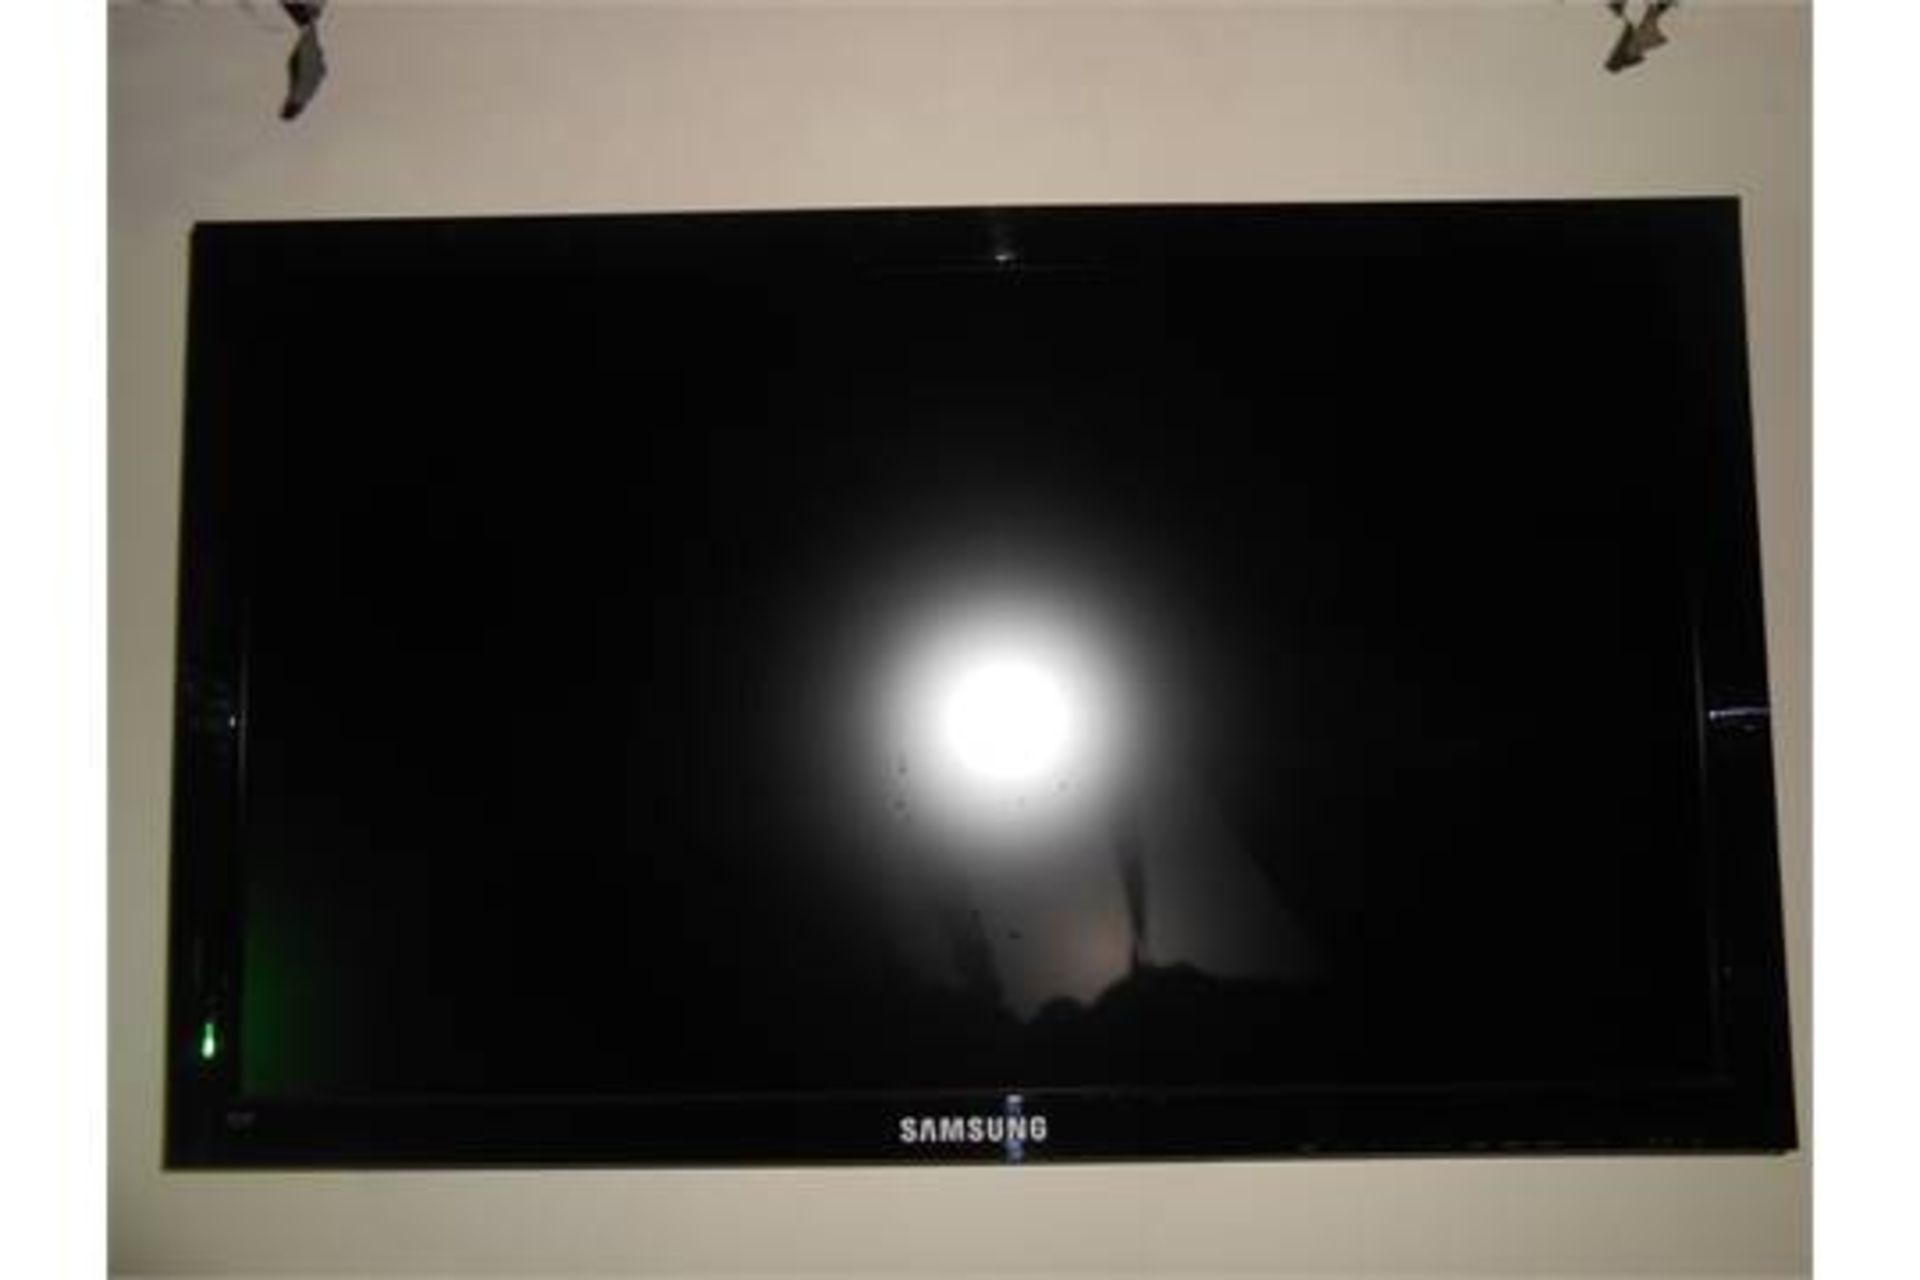 40"""""""" Samsung Lcd Display Screen (Commercial Grade) Manufacturer Refurbished Sold With Desk